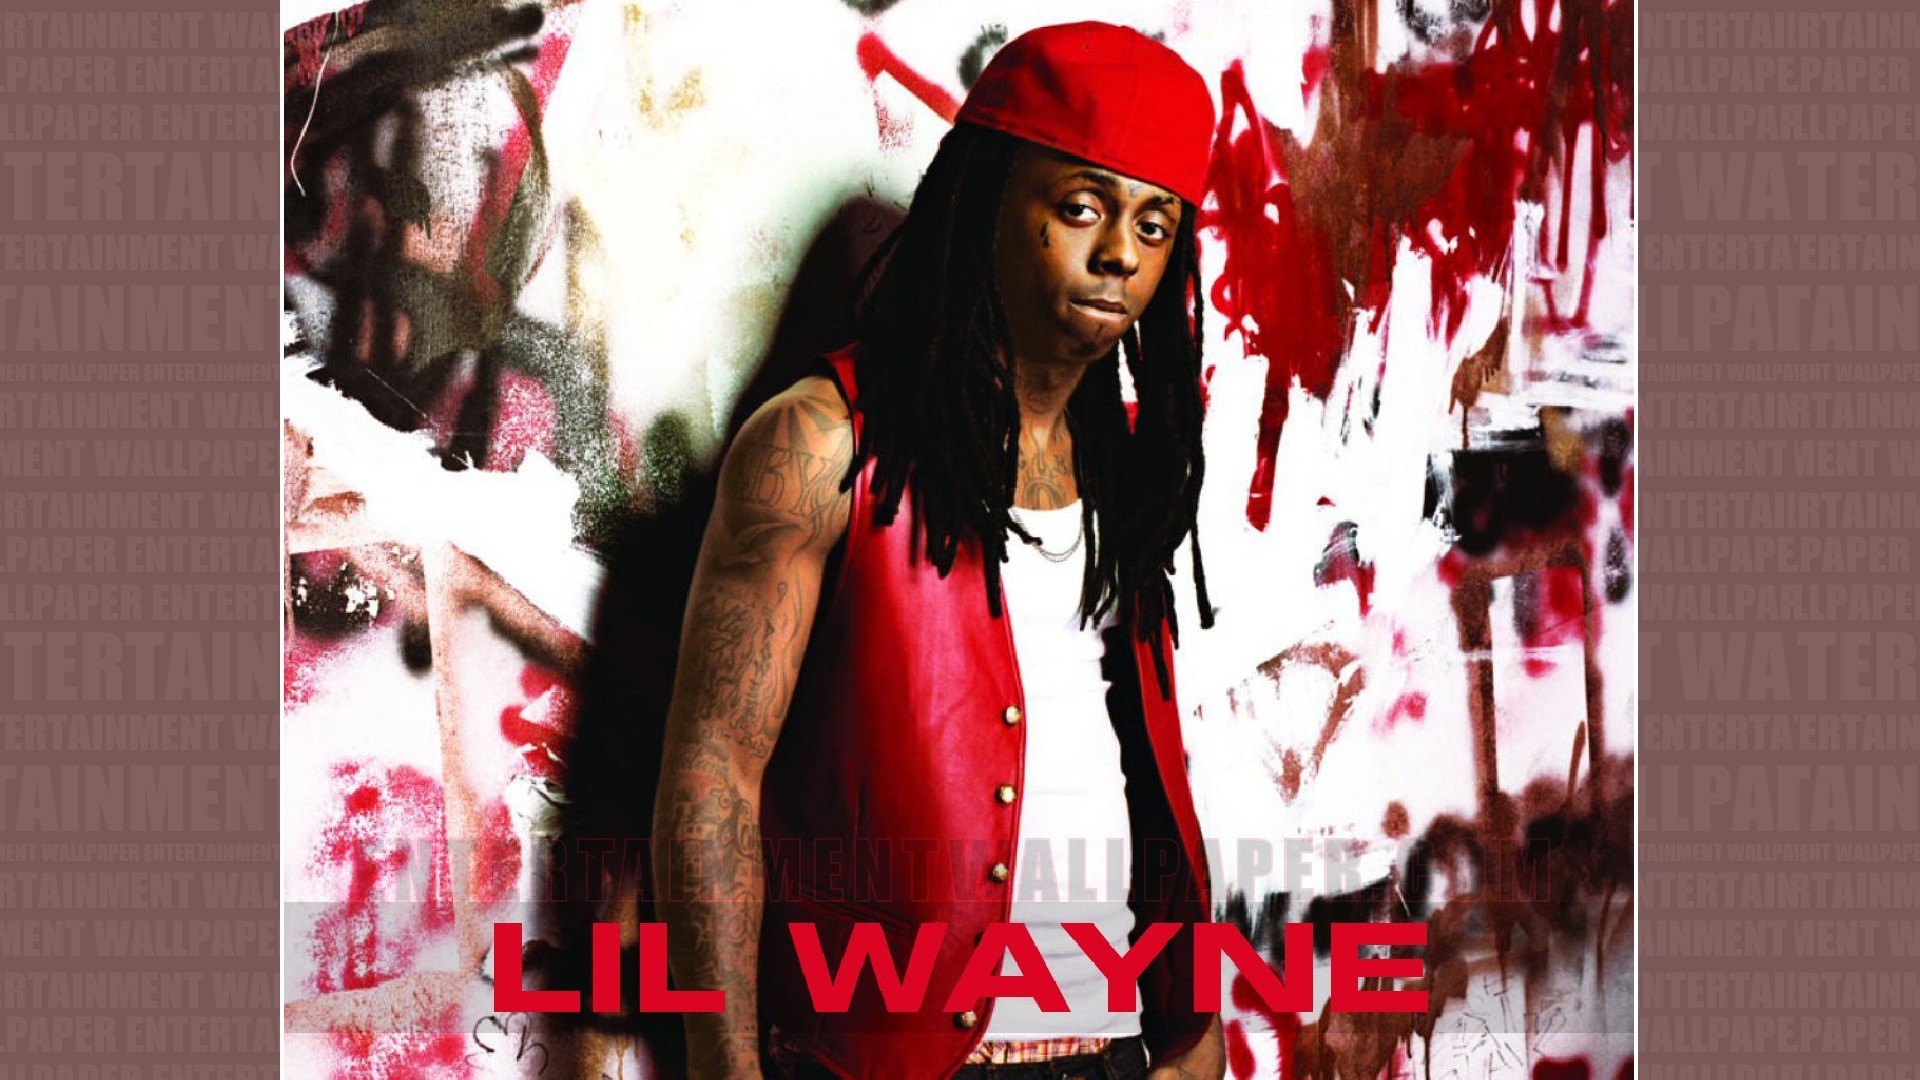 1920x1080 Lil Wayne Wallpaper - Original size, download now.